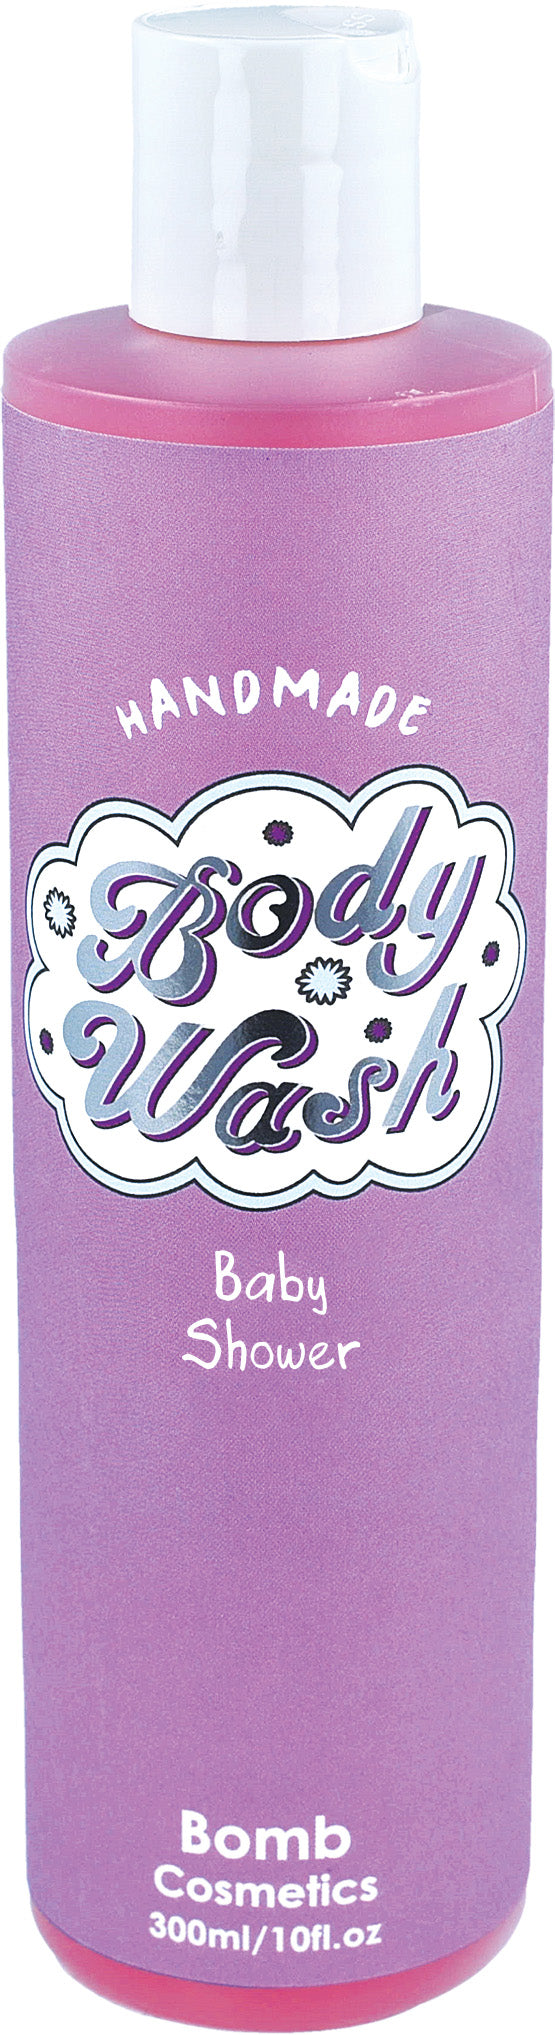 Bomb Cosmetics - Baby Shower Body Wash - 300ml